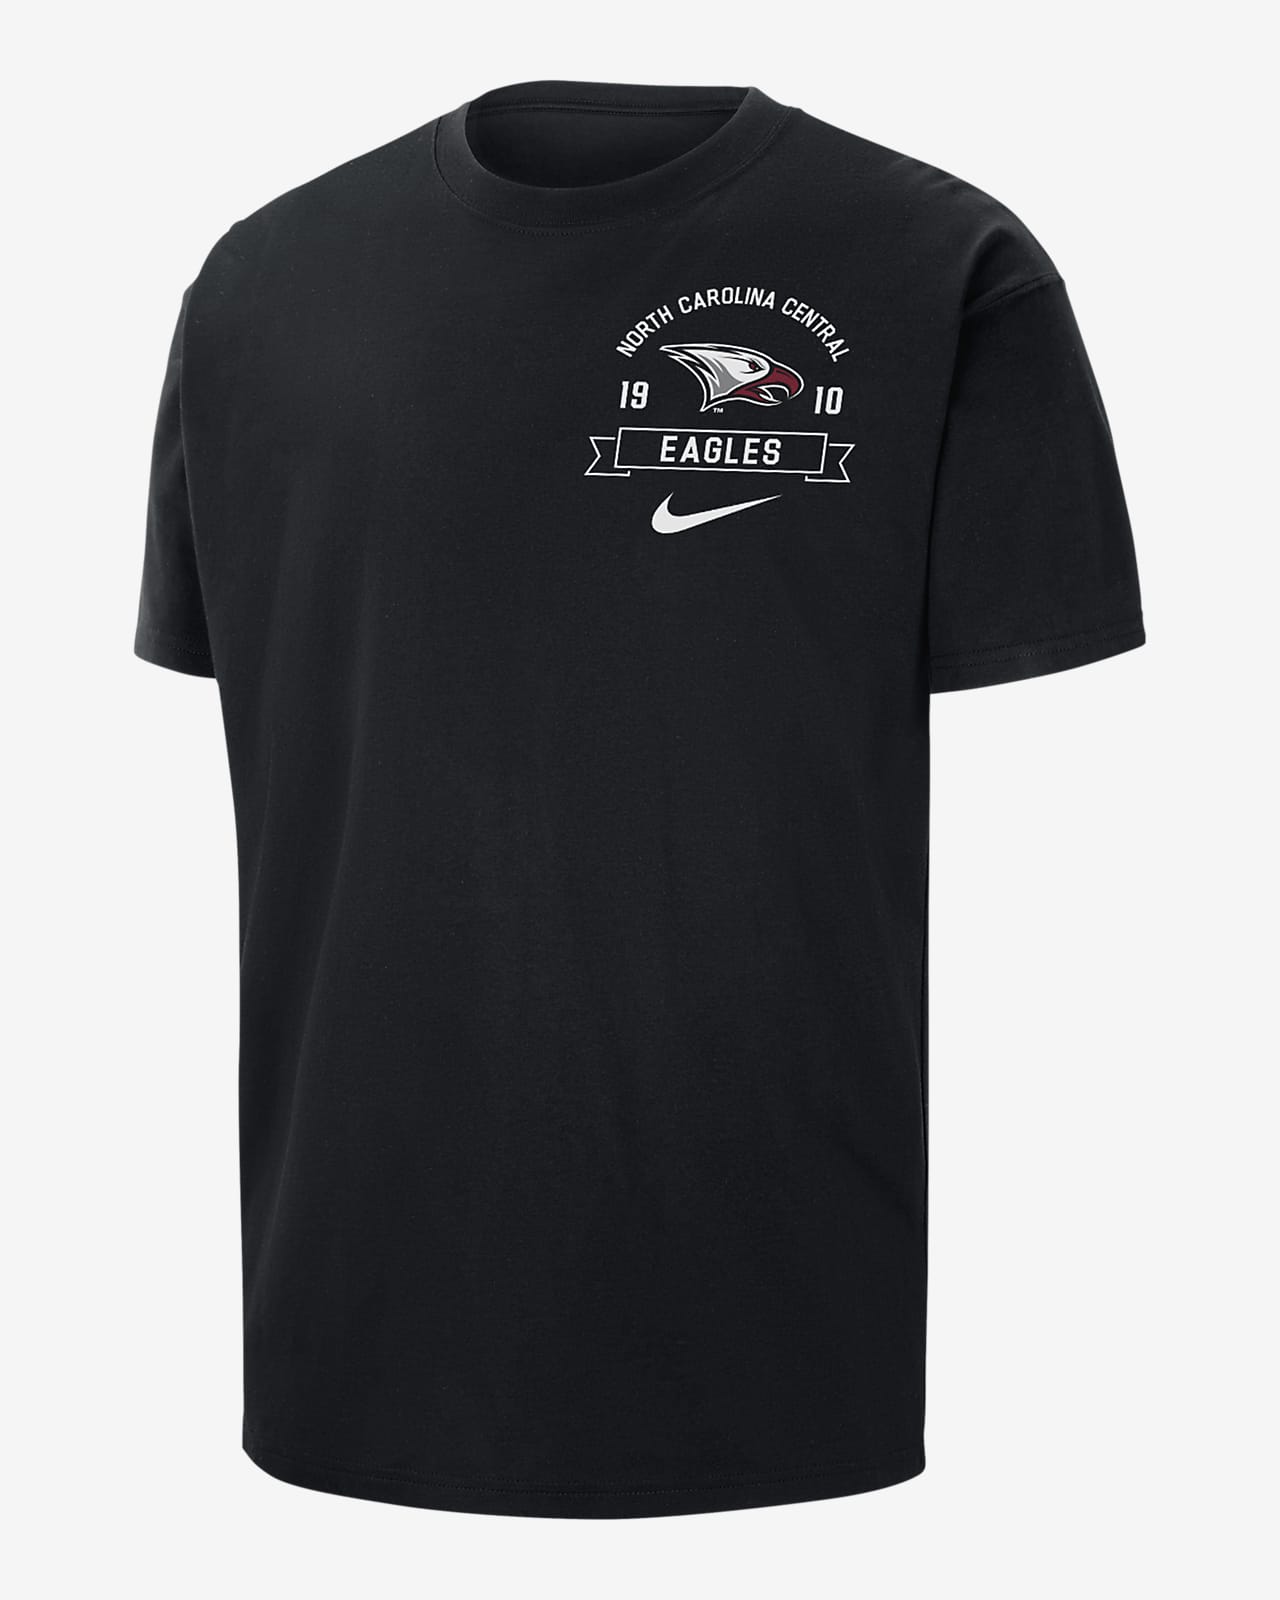 North Carolina Central Max90 Men's Nike College T-Shirt